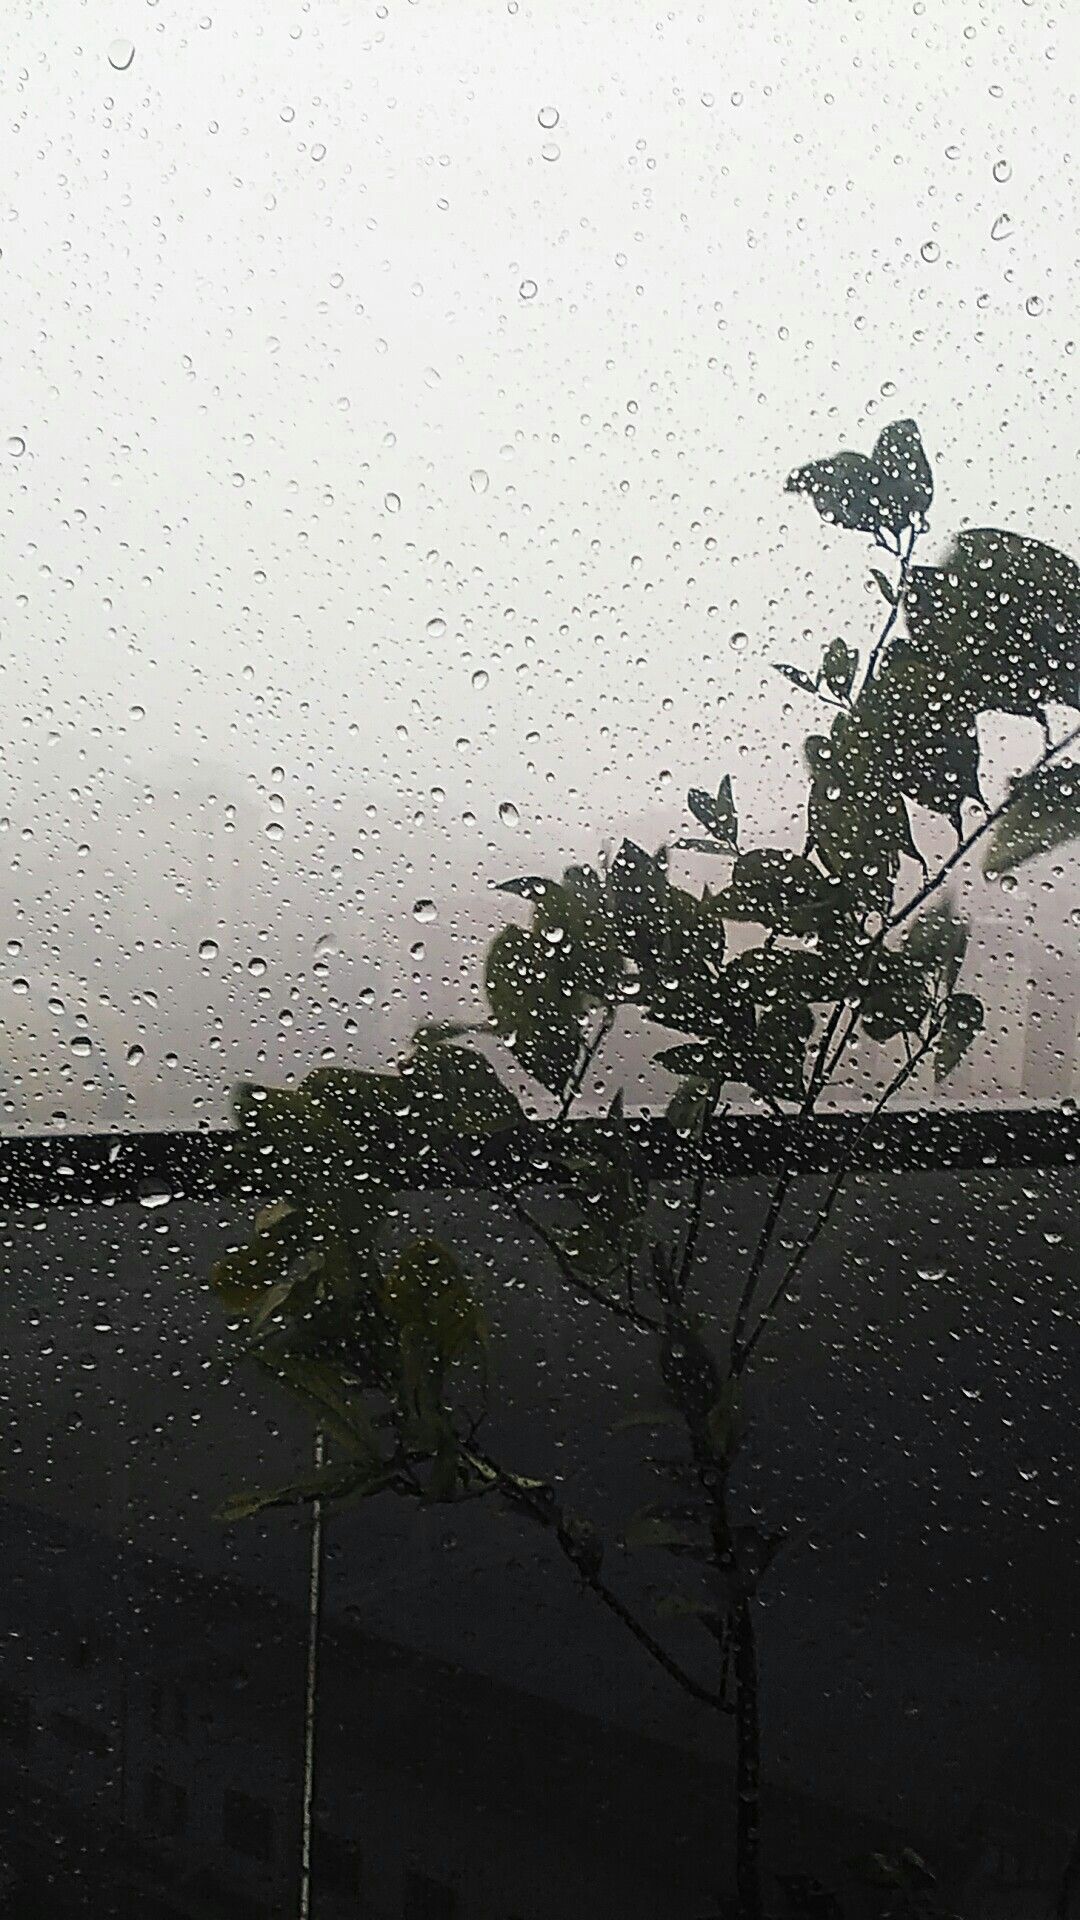 It's raining again. Rain wallpaper, Pretty sky, Aesthetic wallpaper